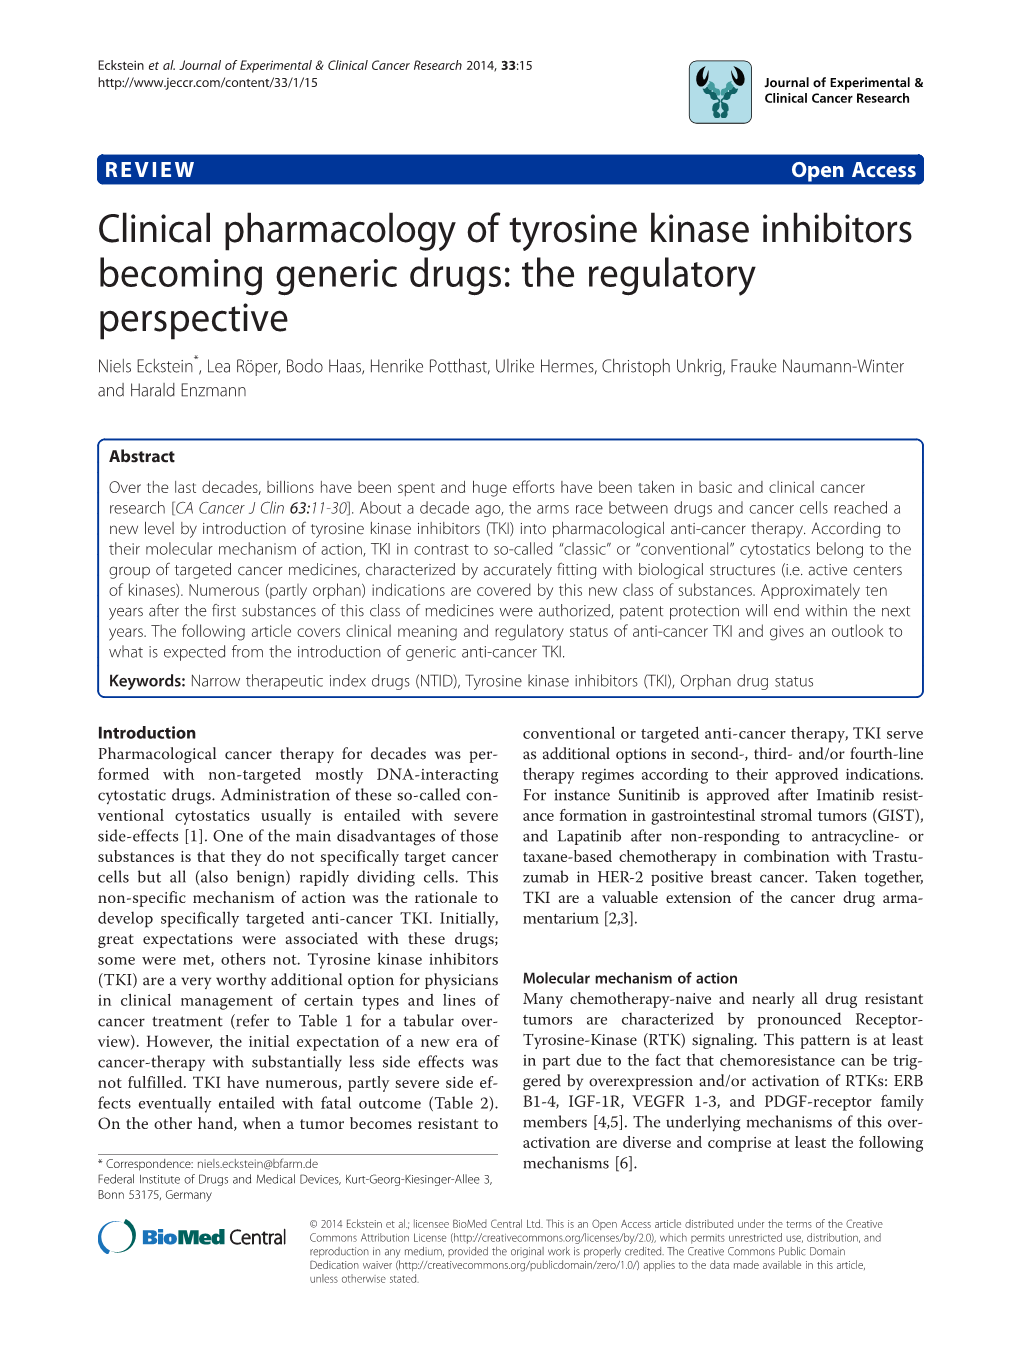 Clinical Pharmacology of Tyrosine Kinase Inhibitors Becoming Generic